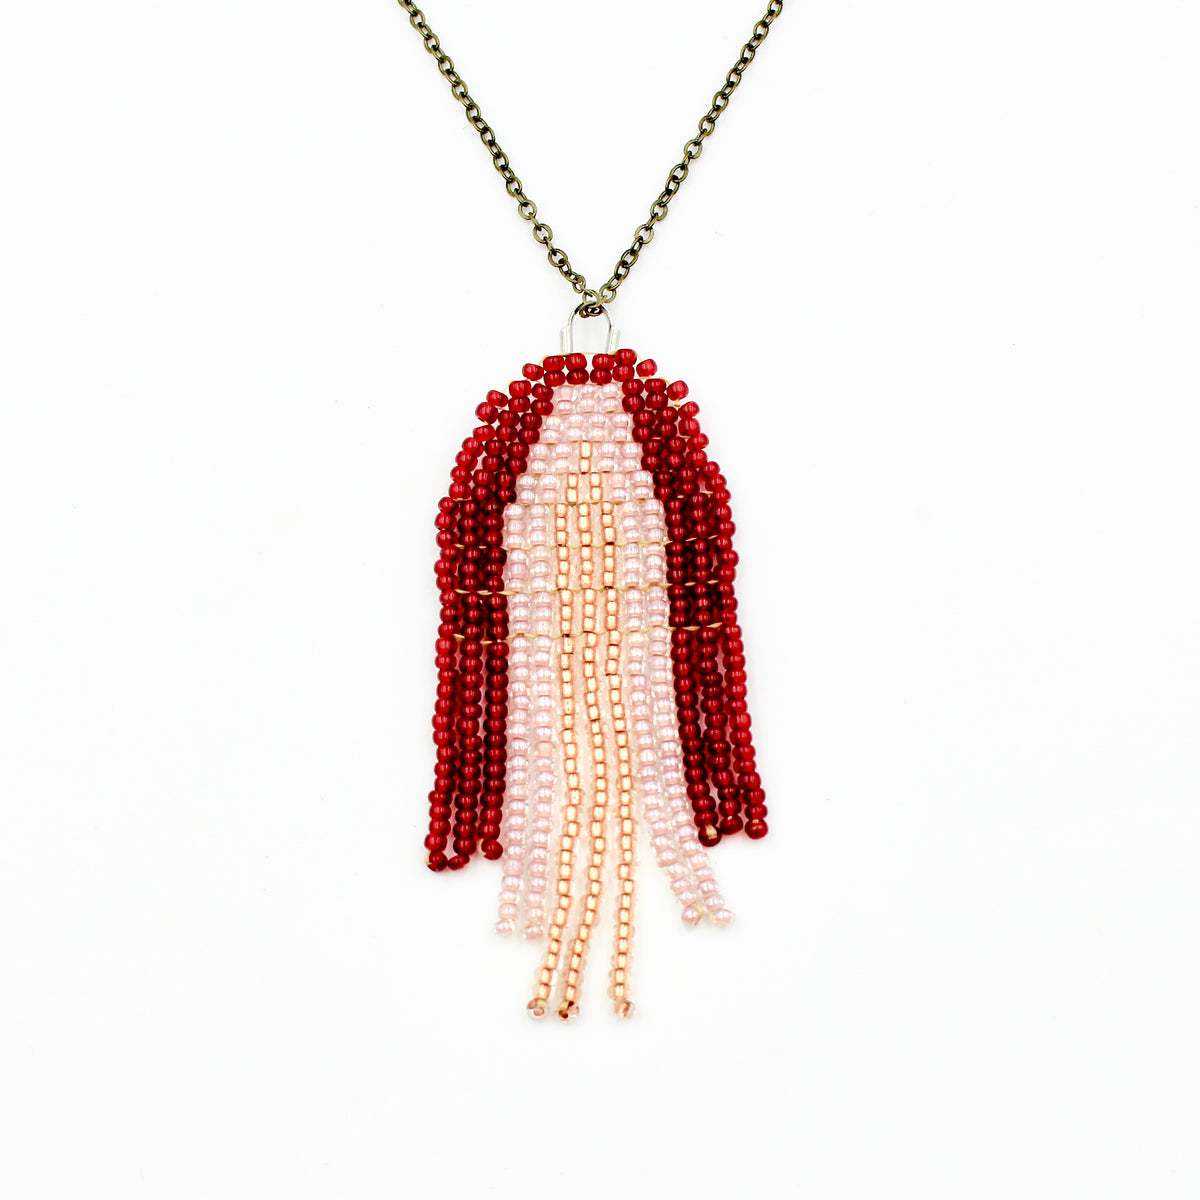 Zumma Necklace - Woven Seed Beads